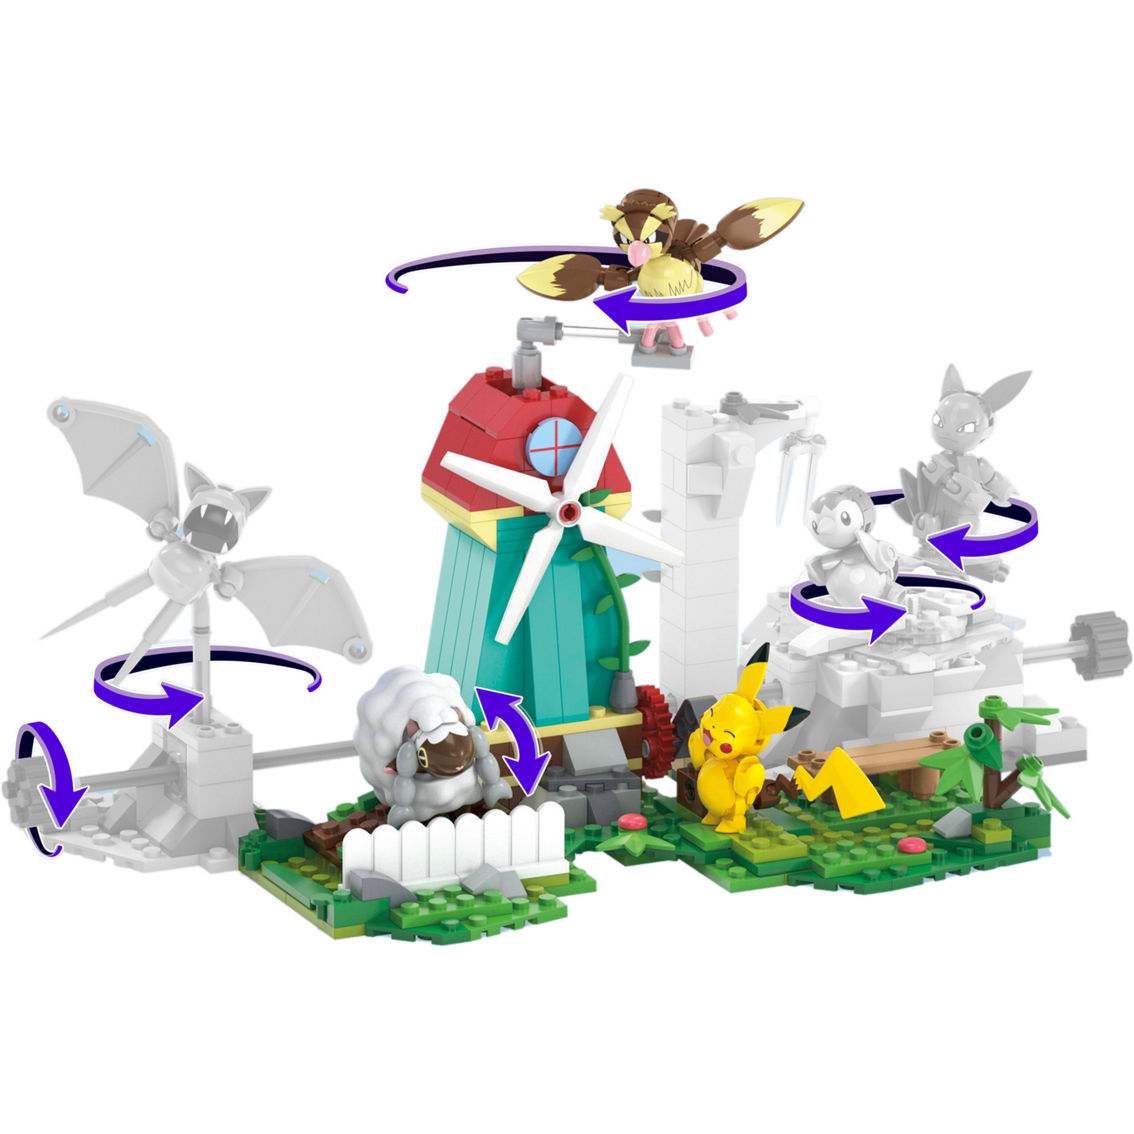 Get Moving with Mattel's MEGA Pokémon Motion Pikachu Building Set